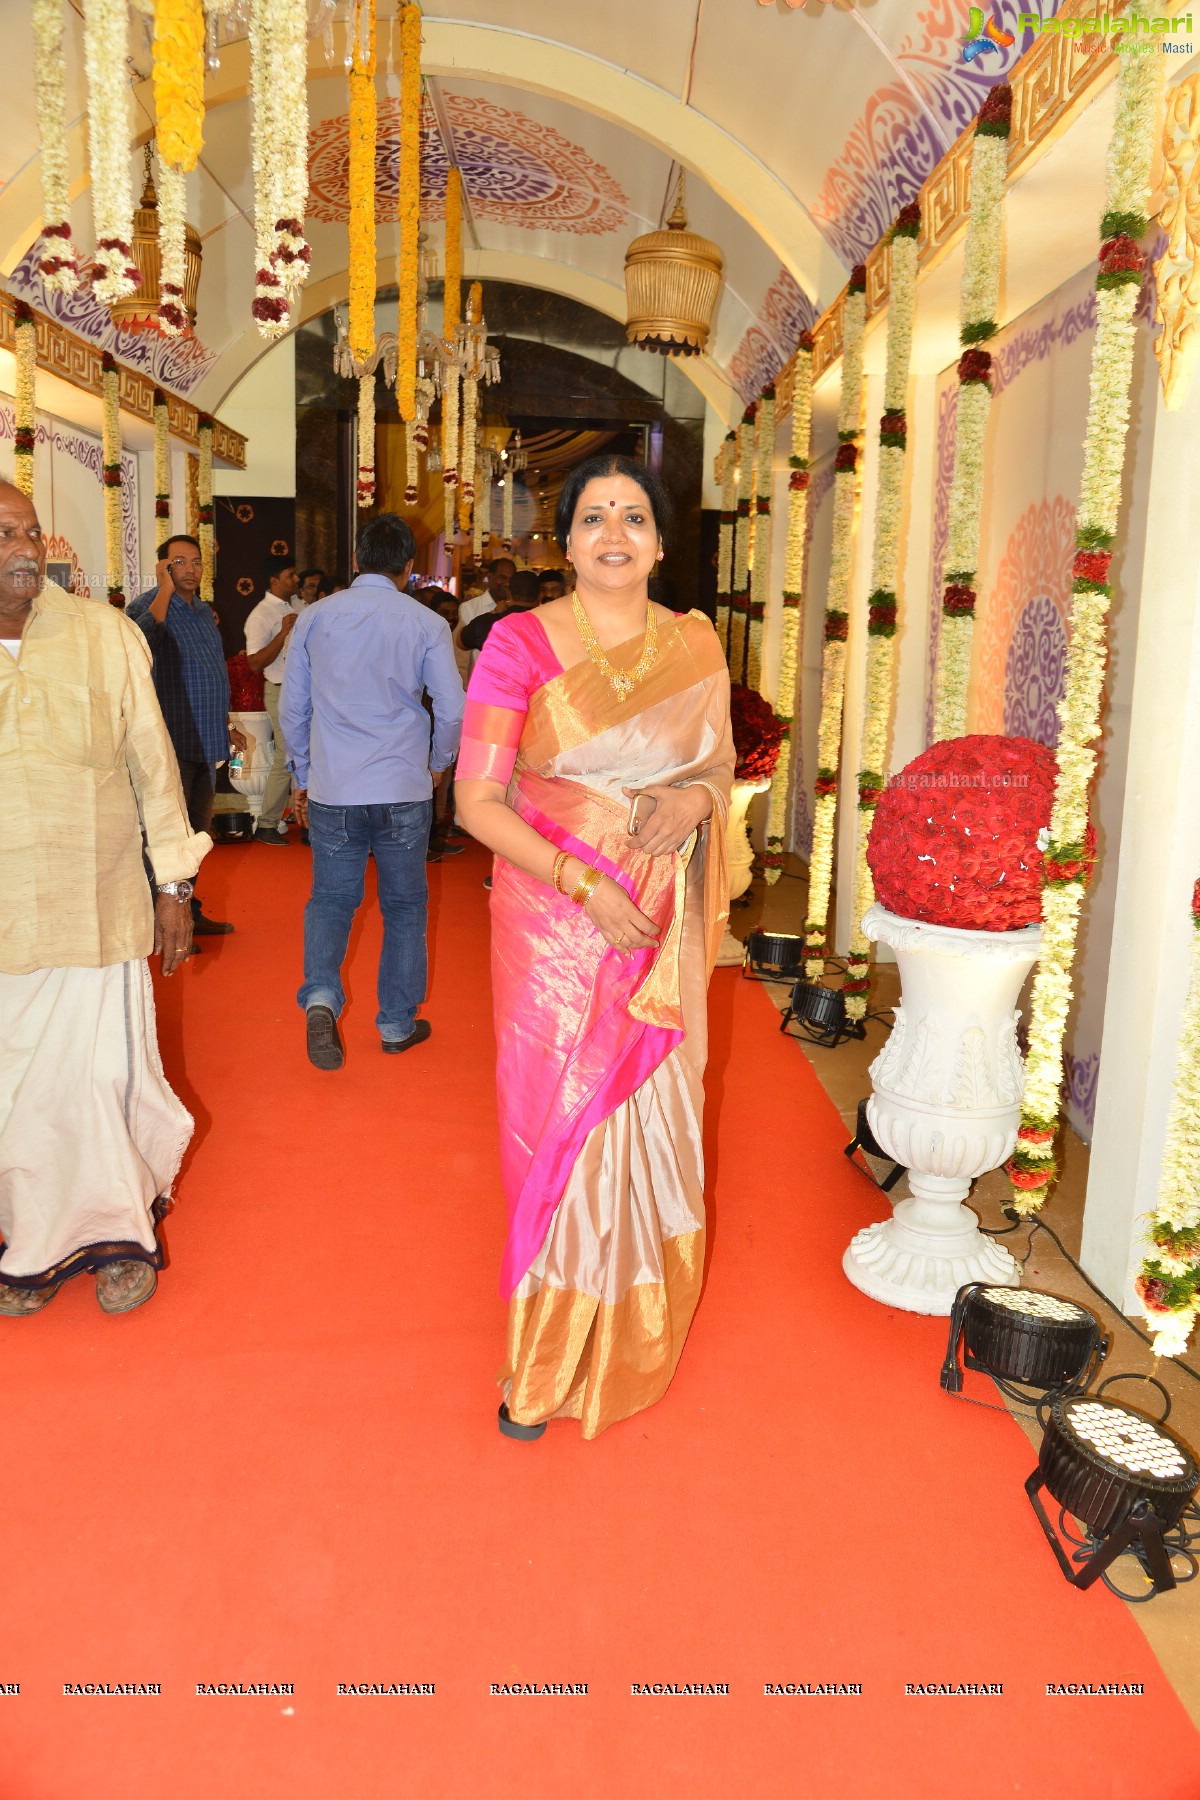 Bandla Ganesh Brother's Daughter Ashritha-Sai Pavan Wedding Ceremony at JRC Convention